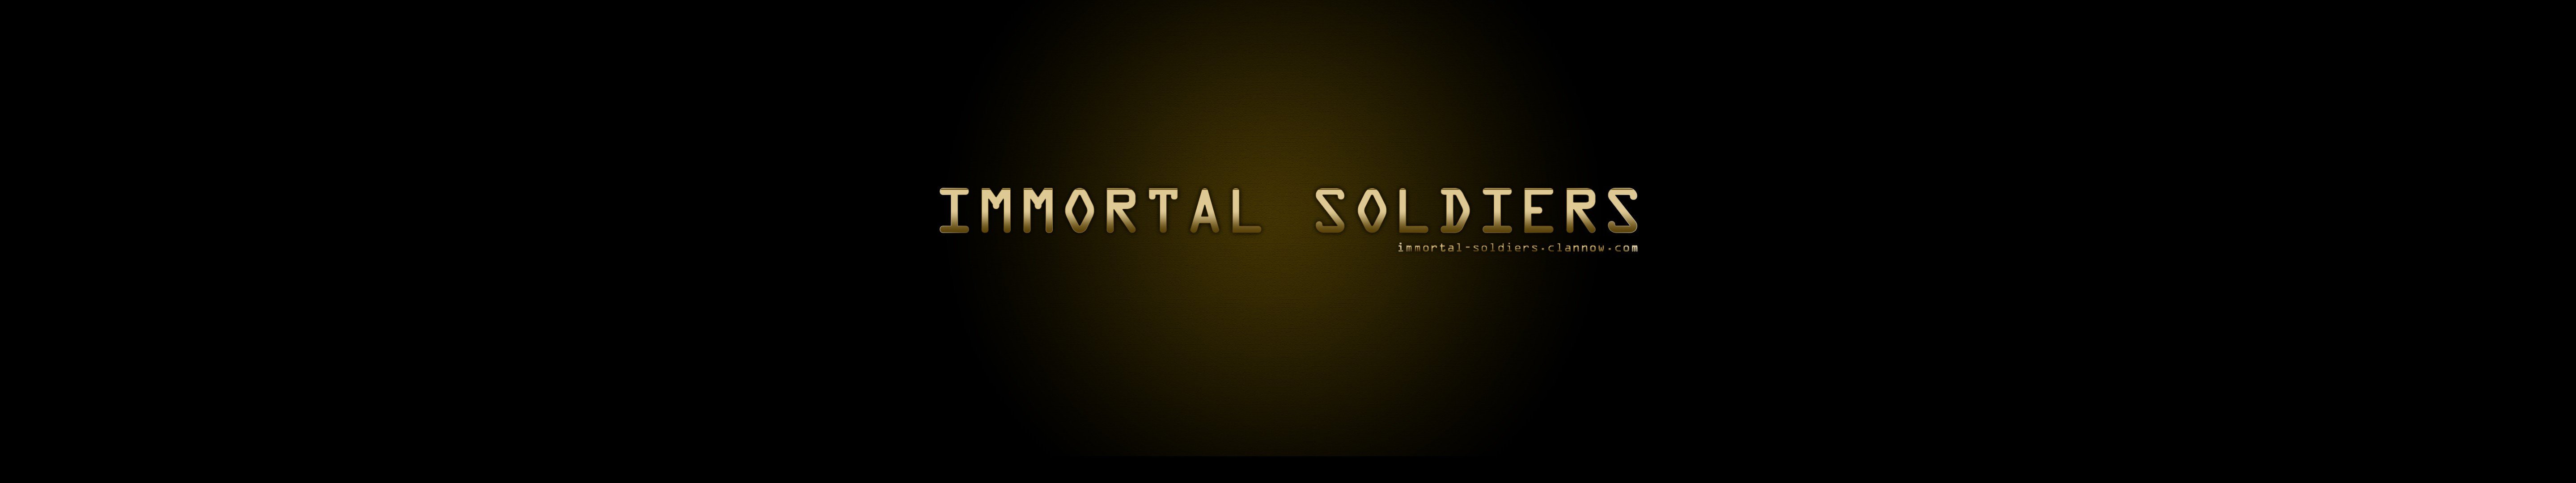 soldiers, Immortal, Multiscreen Wallpaper